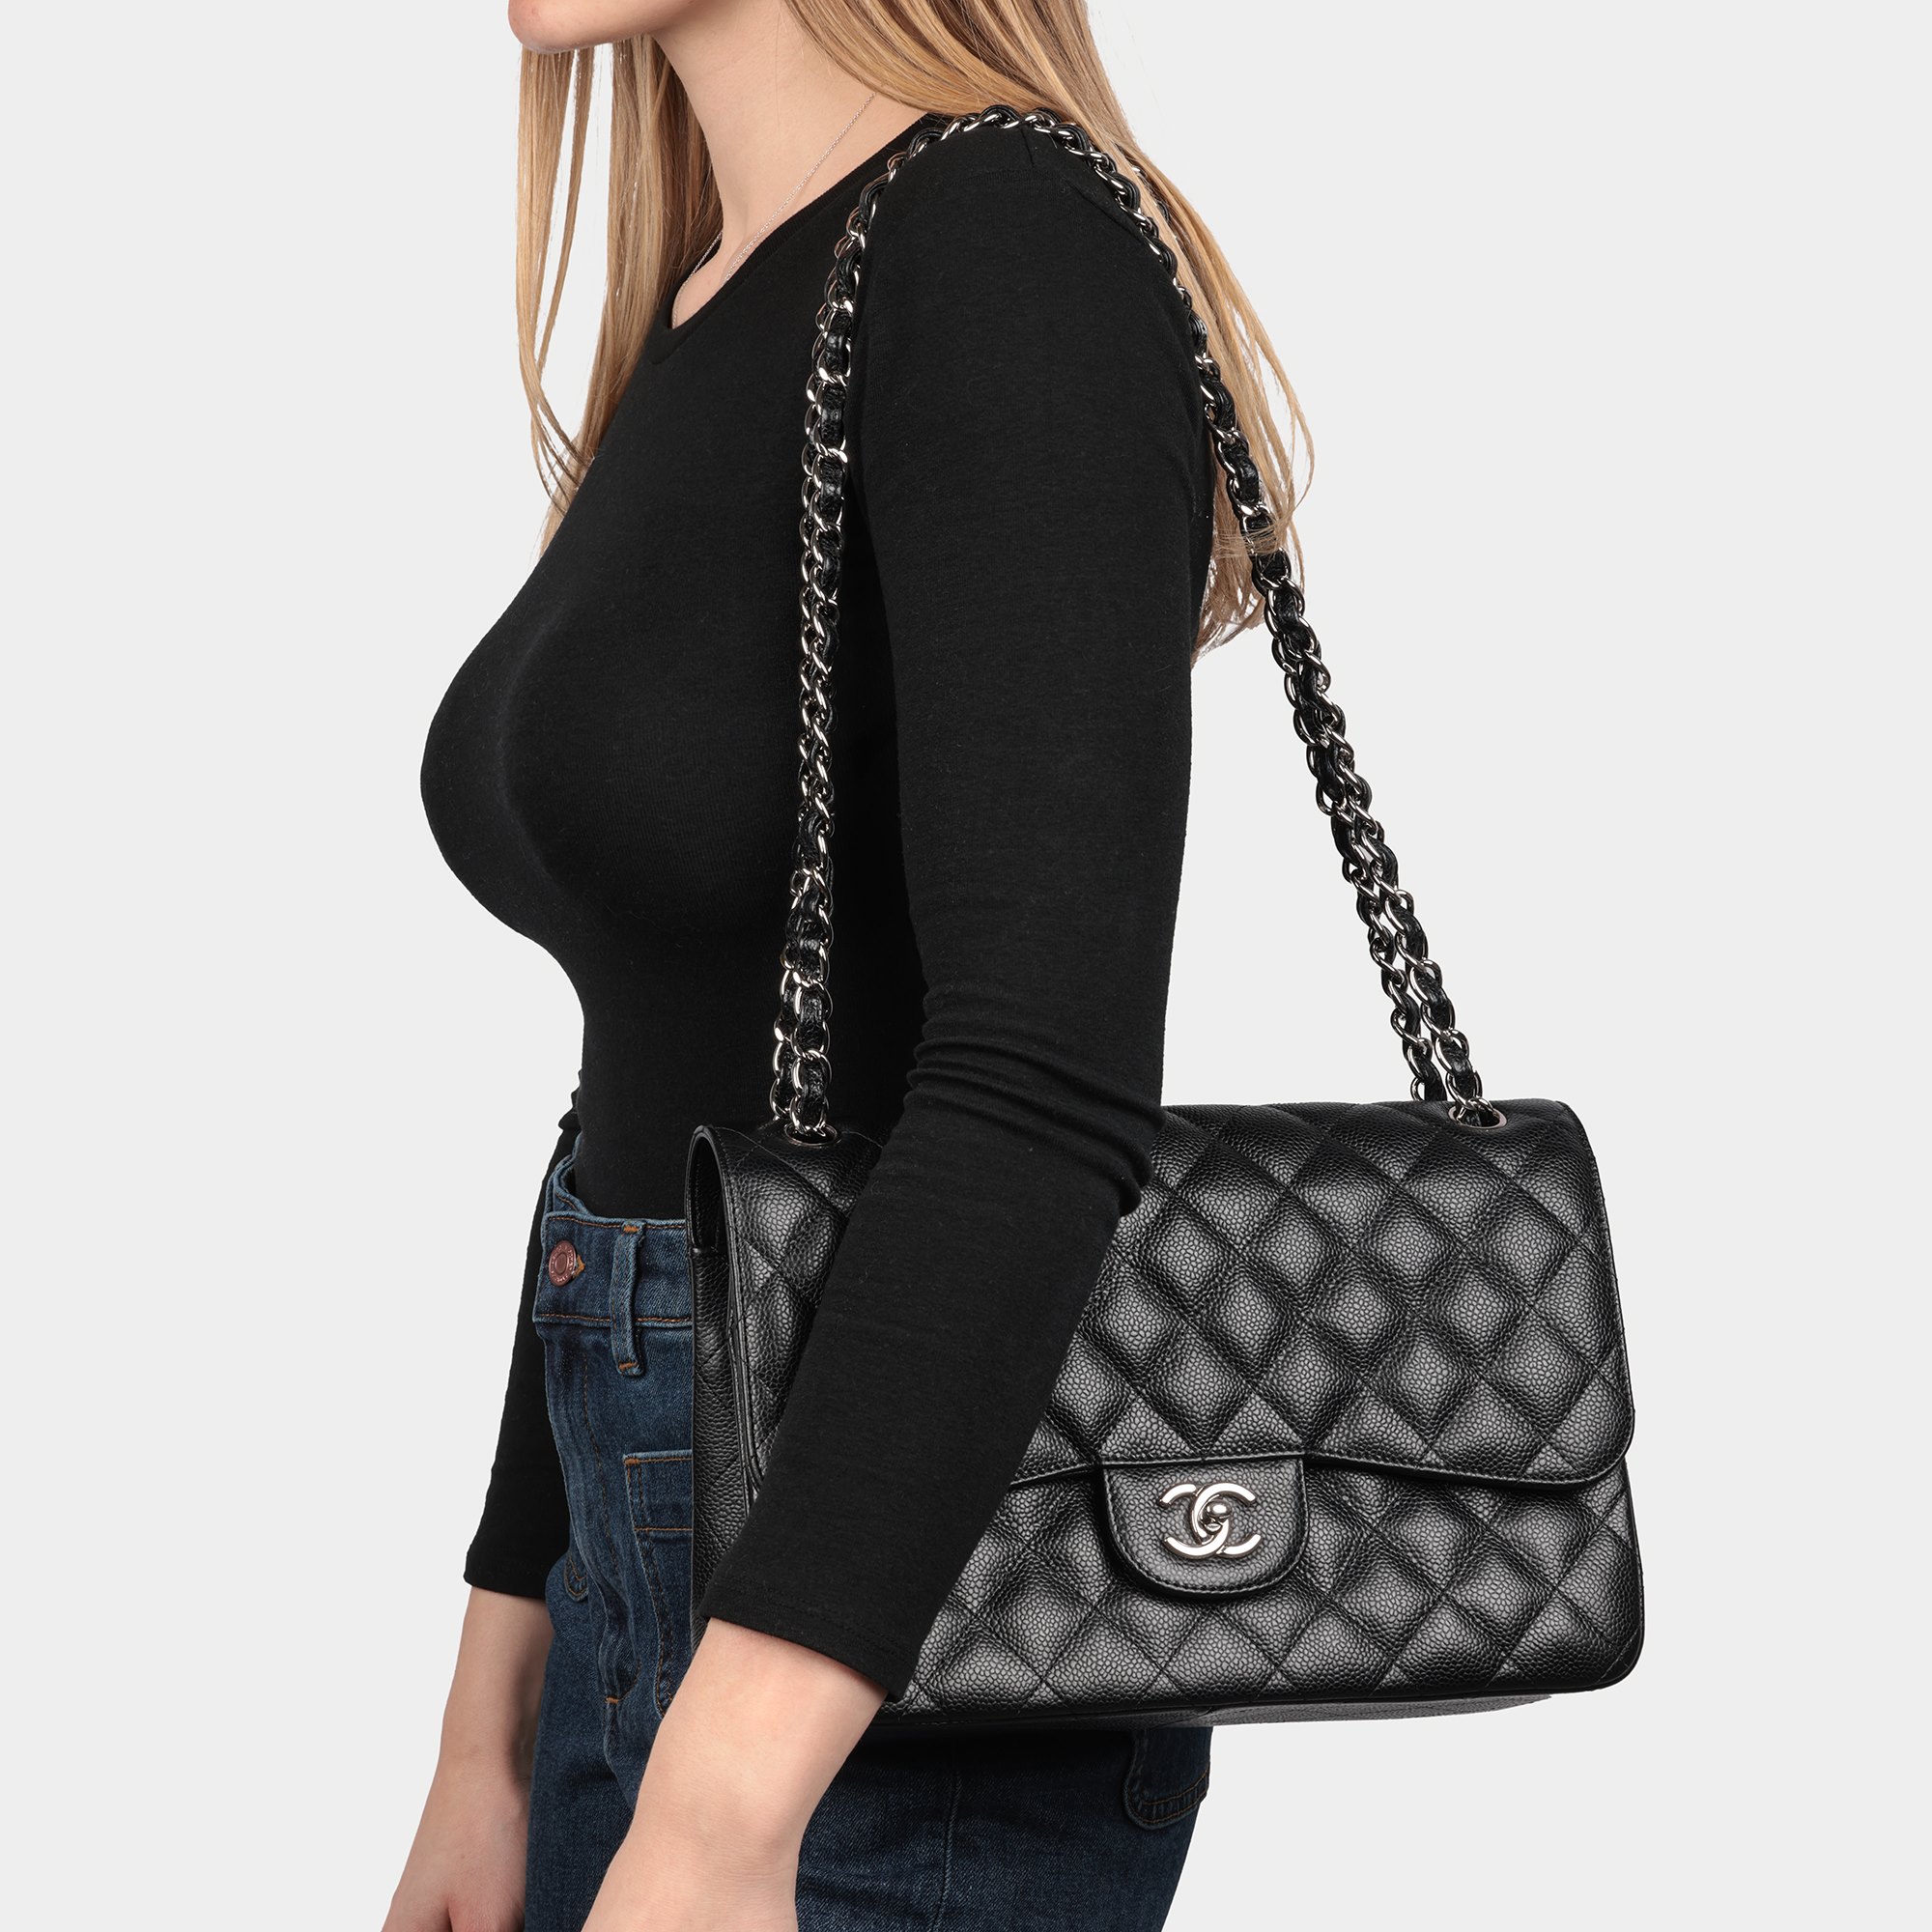 Chanel Jumbo Classic Double Flap Bag 2014 CB865 | Second Hand Handbags